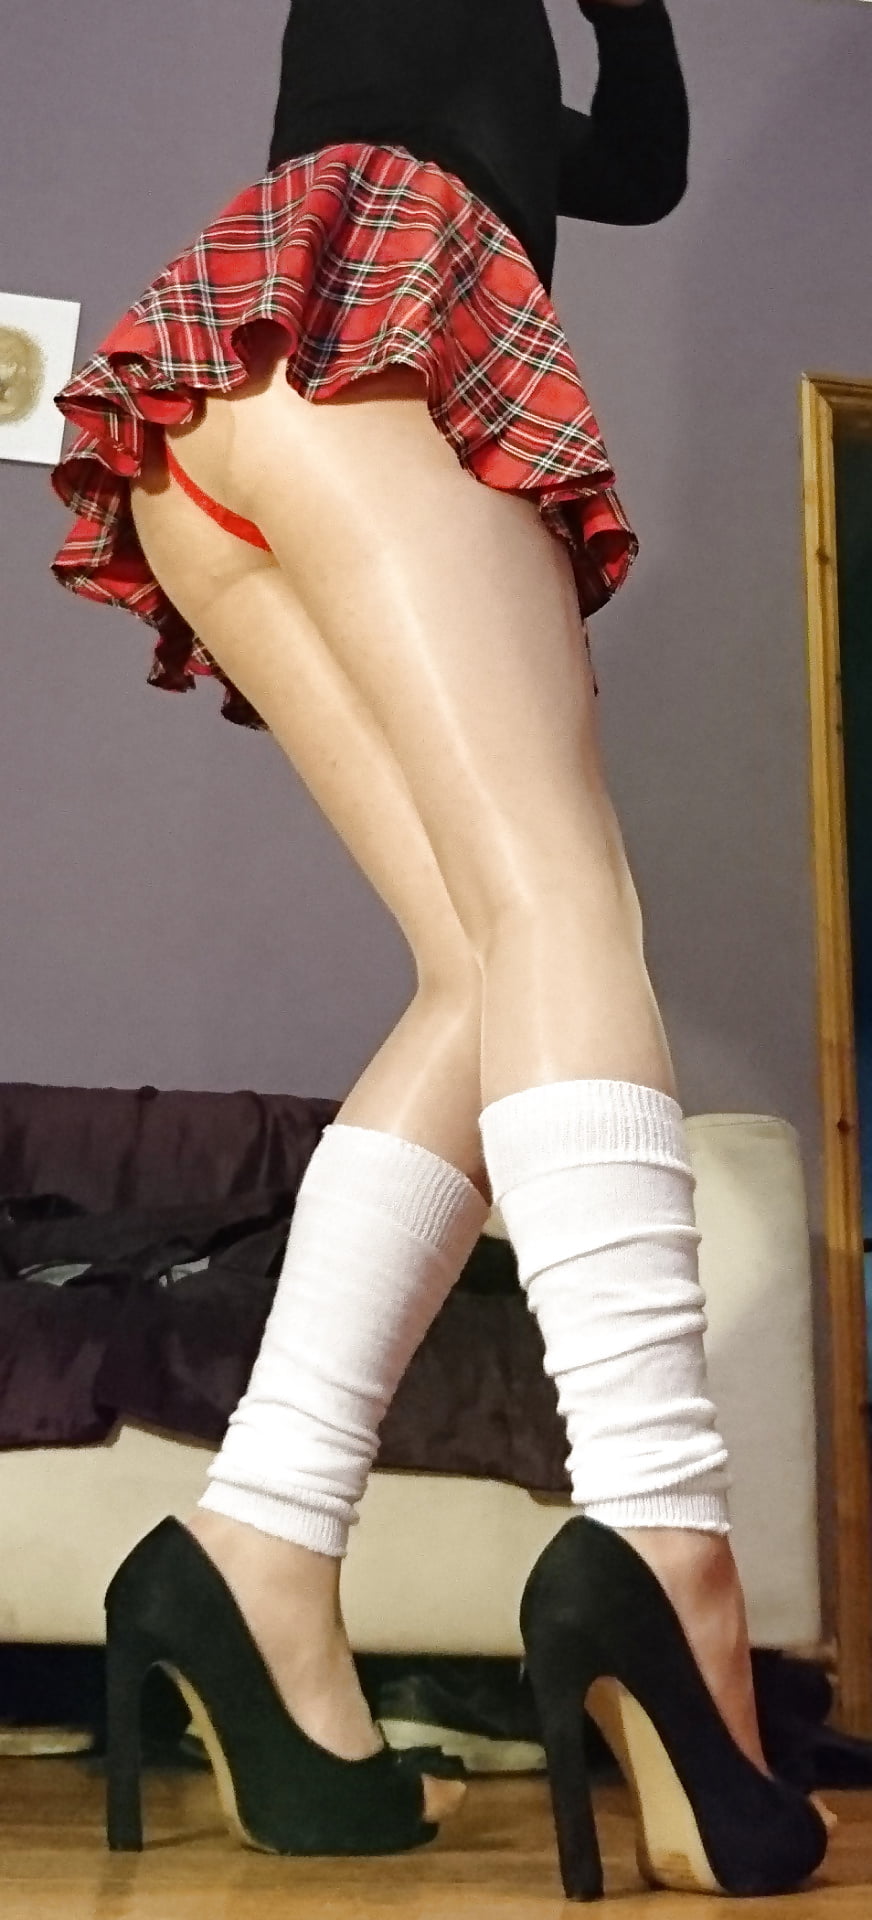 Marie crossdresser college girl, leg warmers and pantyhose #106757947